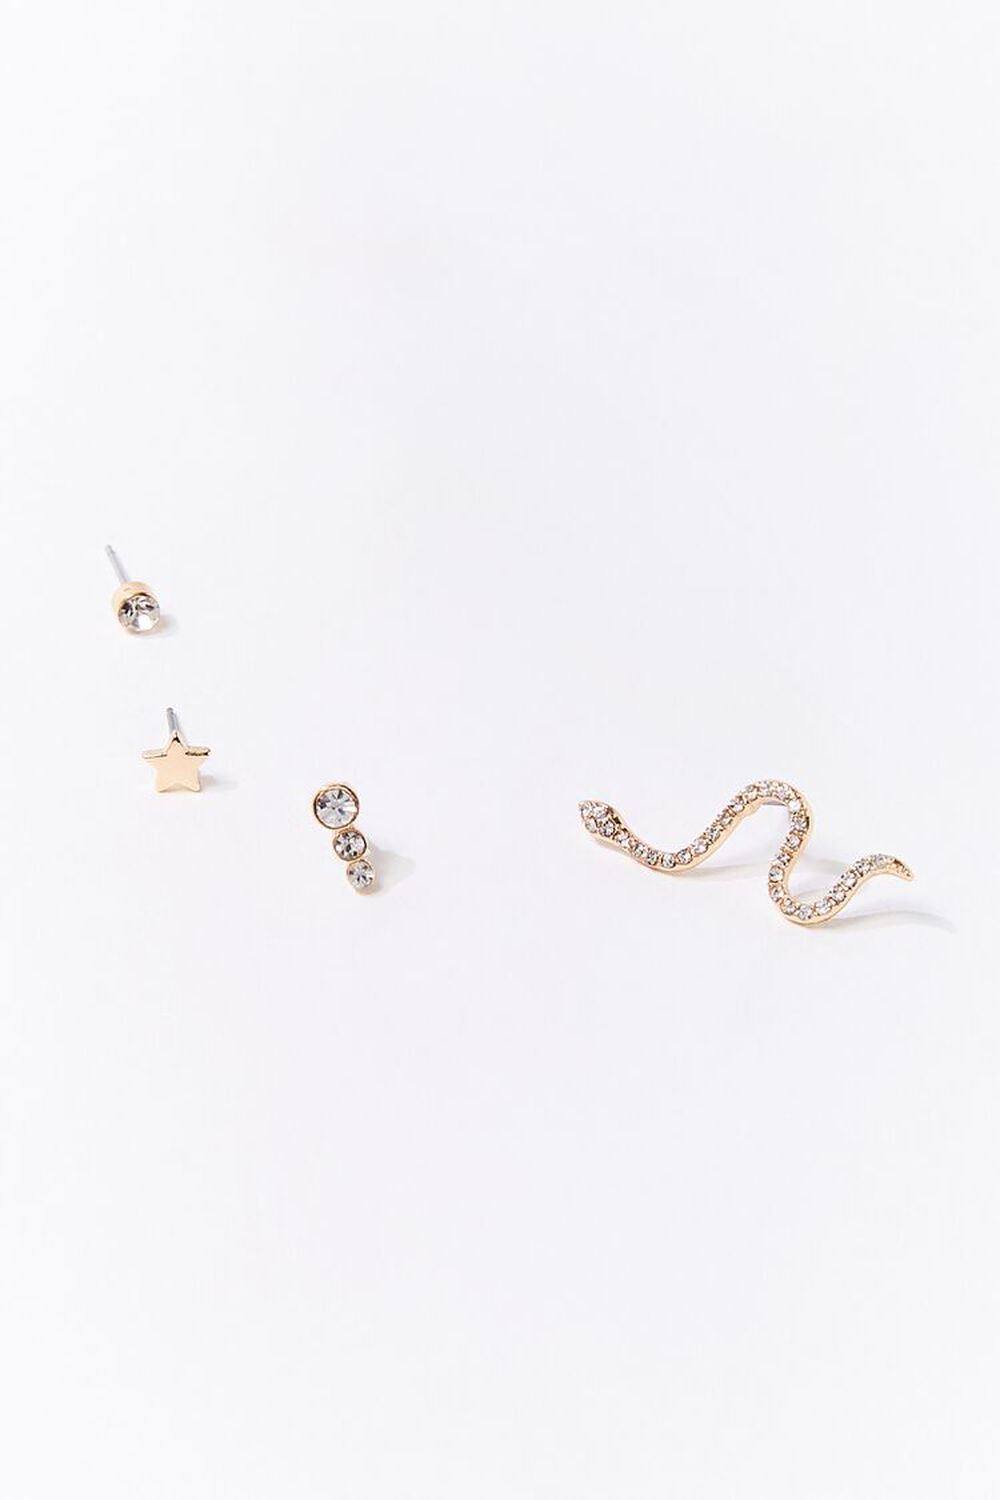 Rhinestone Snake Charm Earring Set, image 2